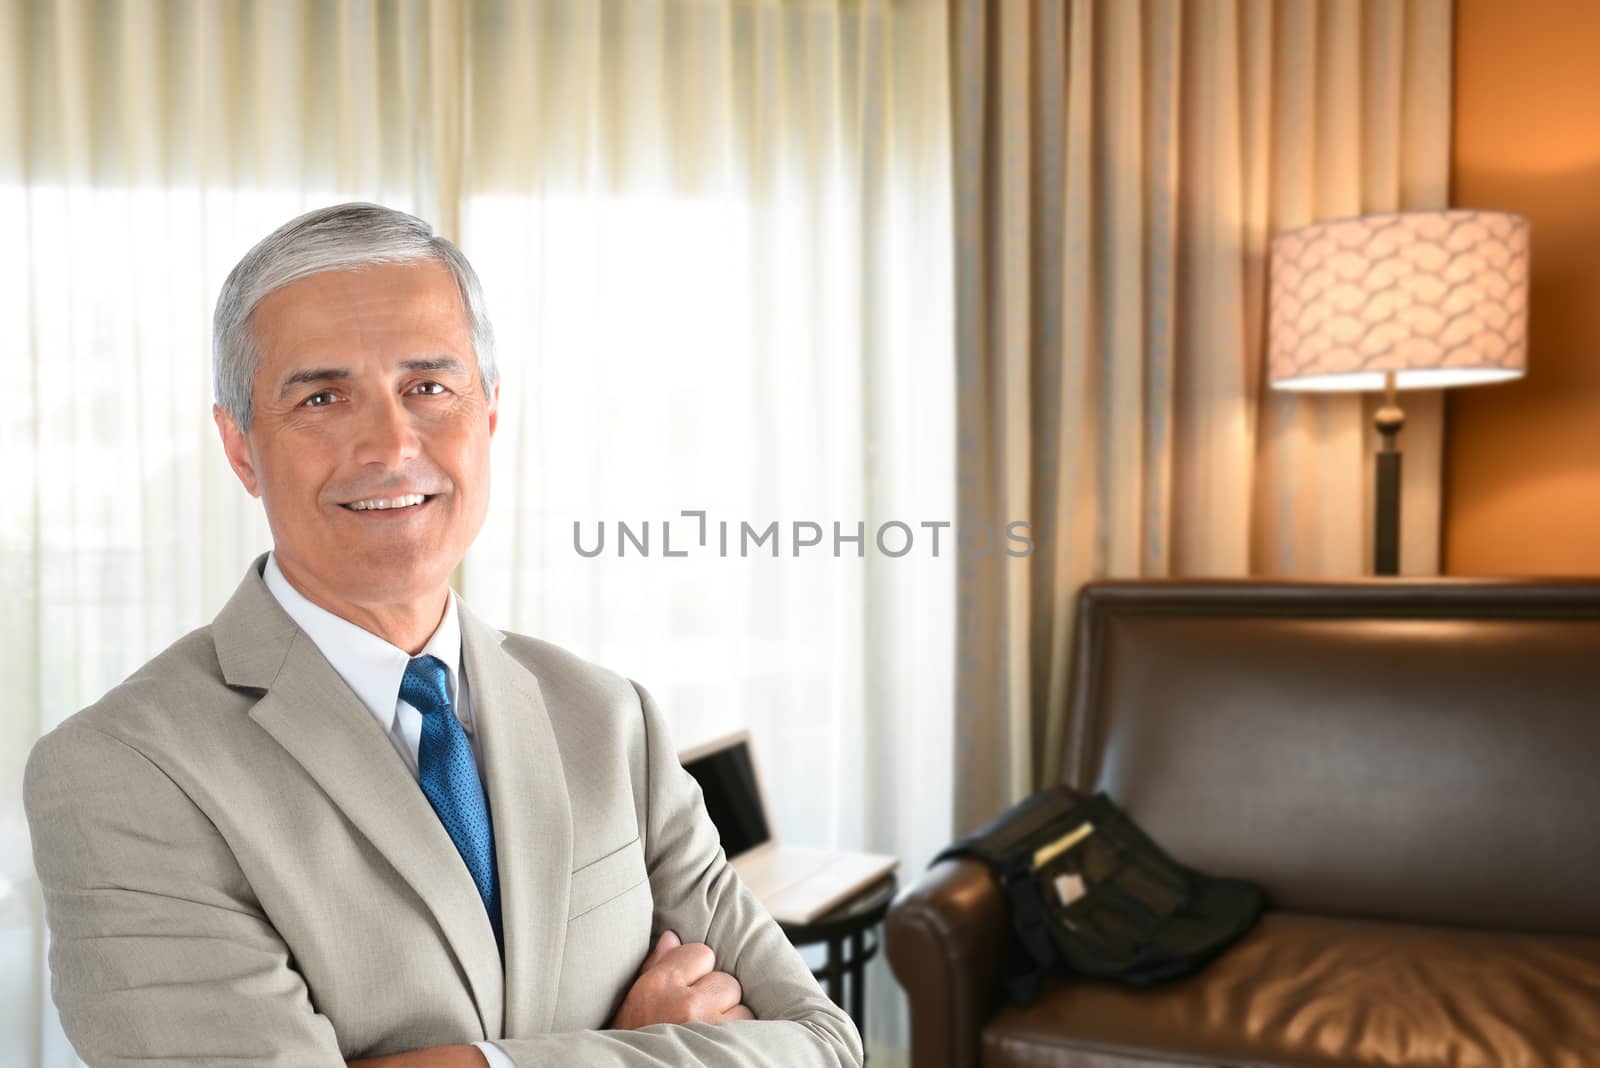 Businessman in Hotel Room by sCukrov